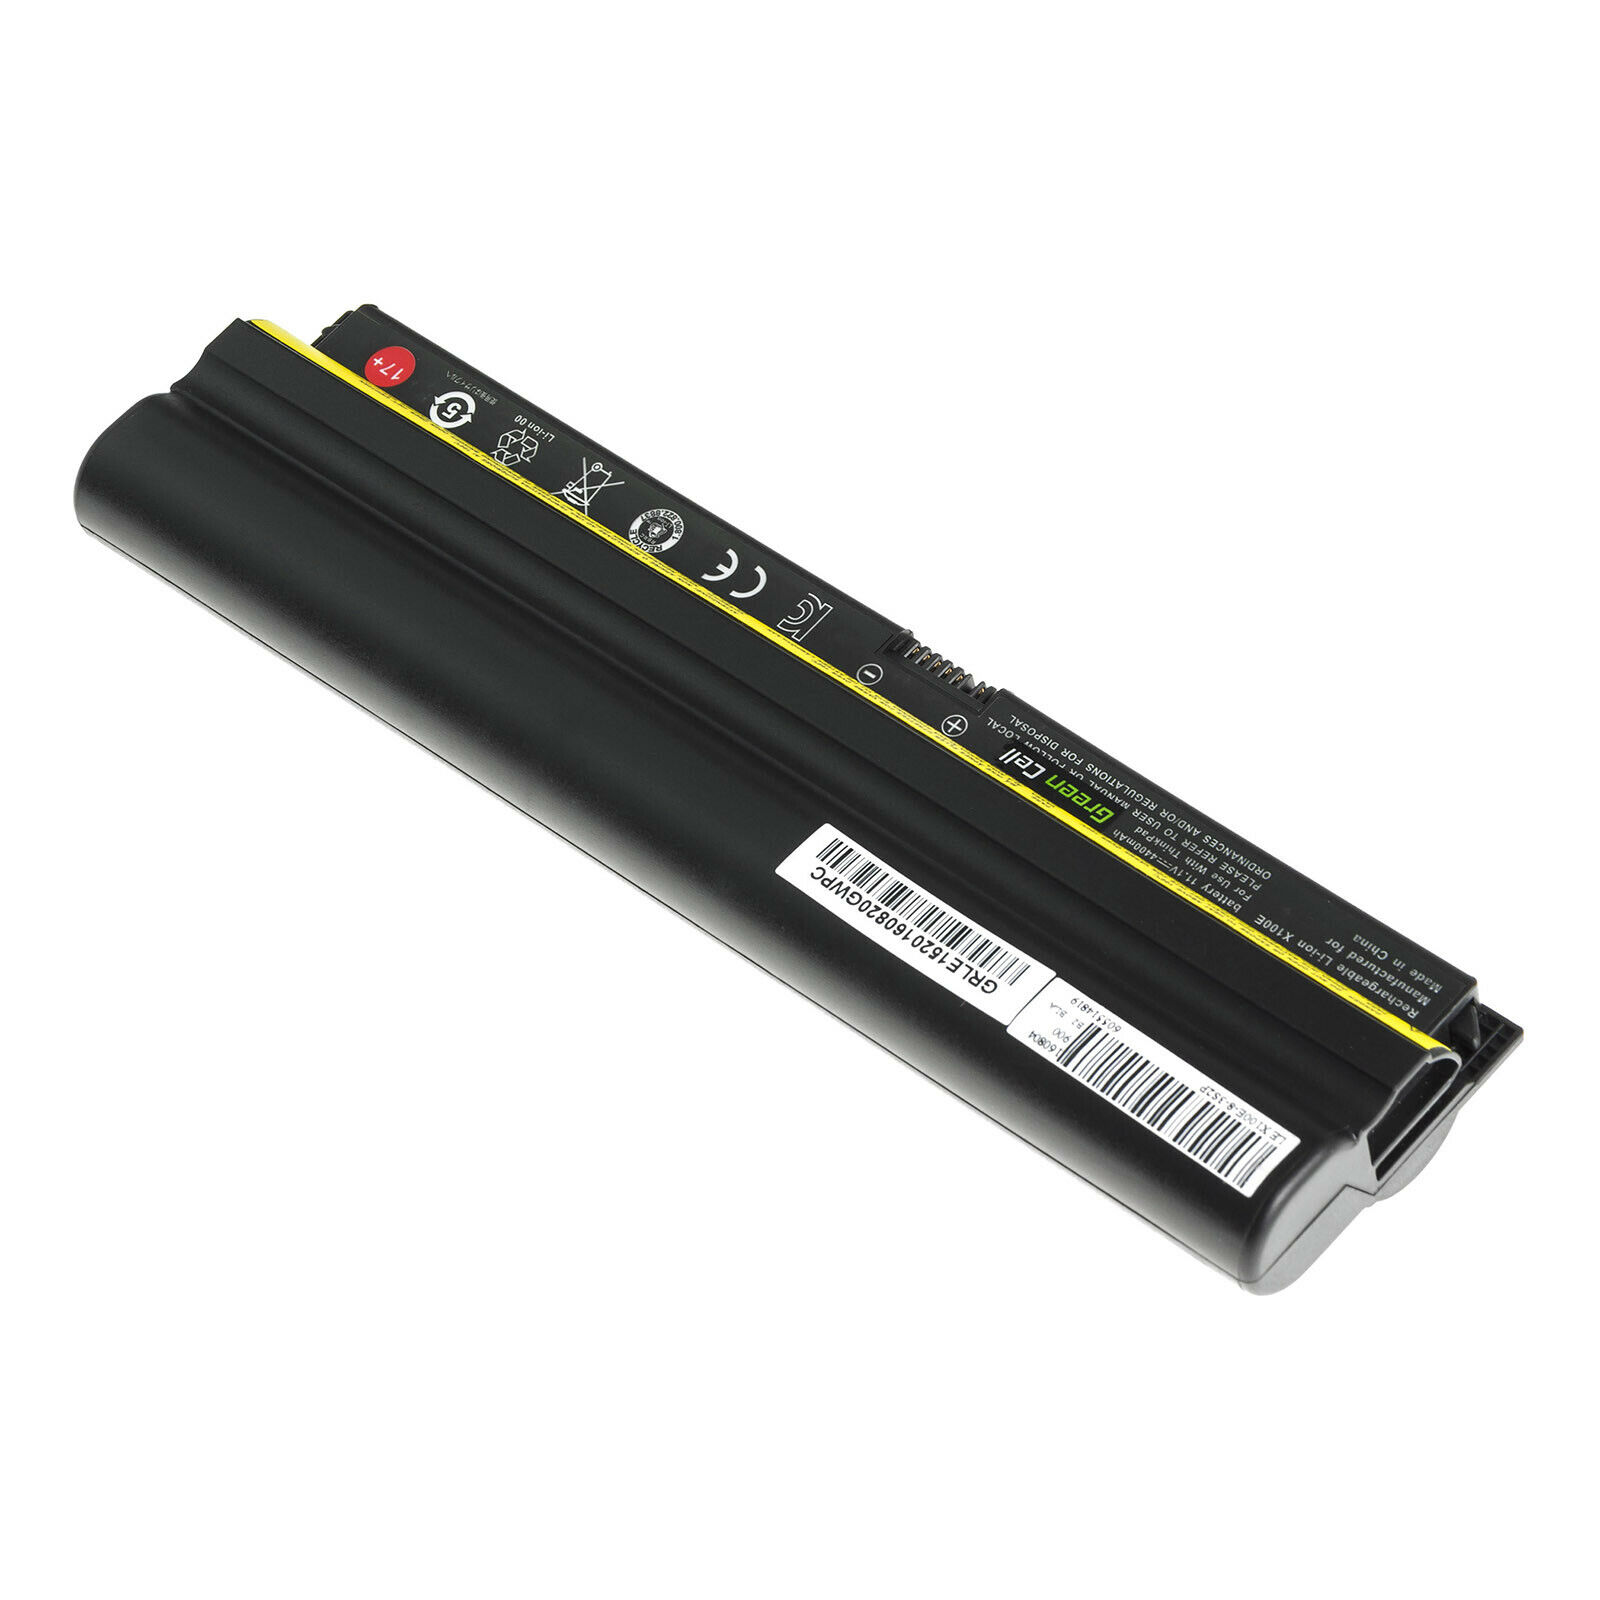 Batería para Lenovo ThinkPad X100e Edge 11 inch E10 42T4785 42T4787 42T4788(compatible)